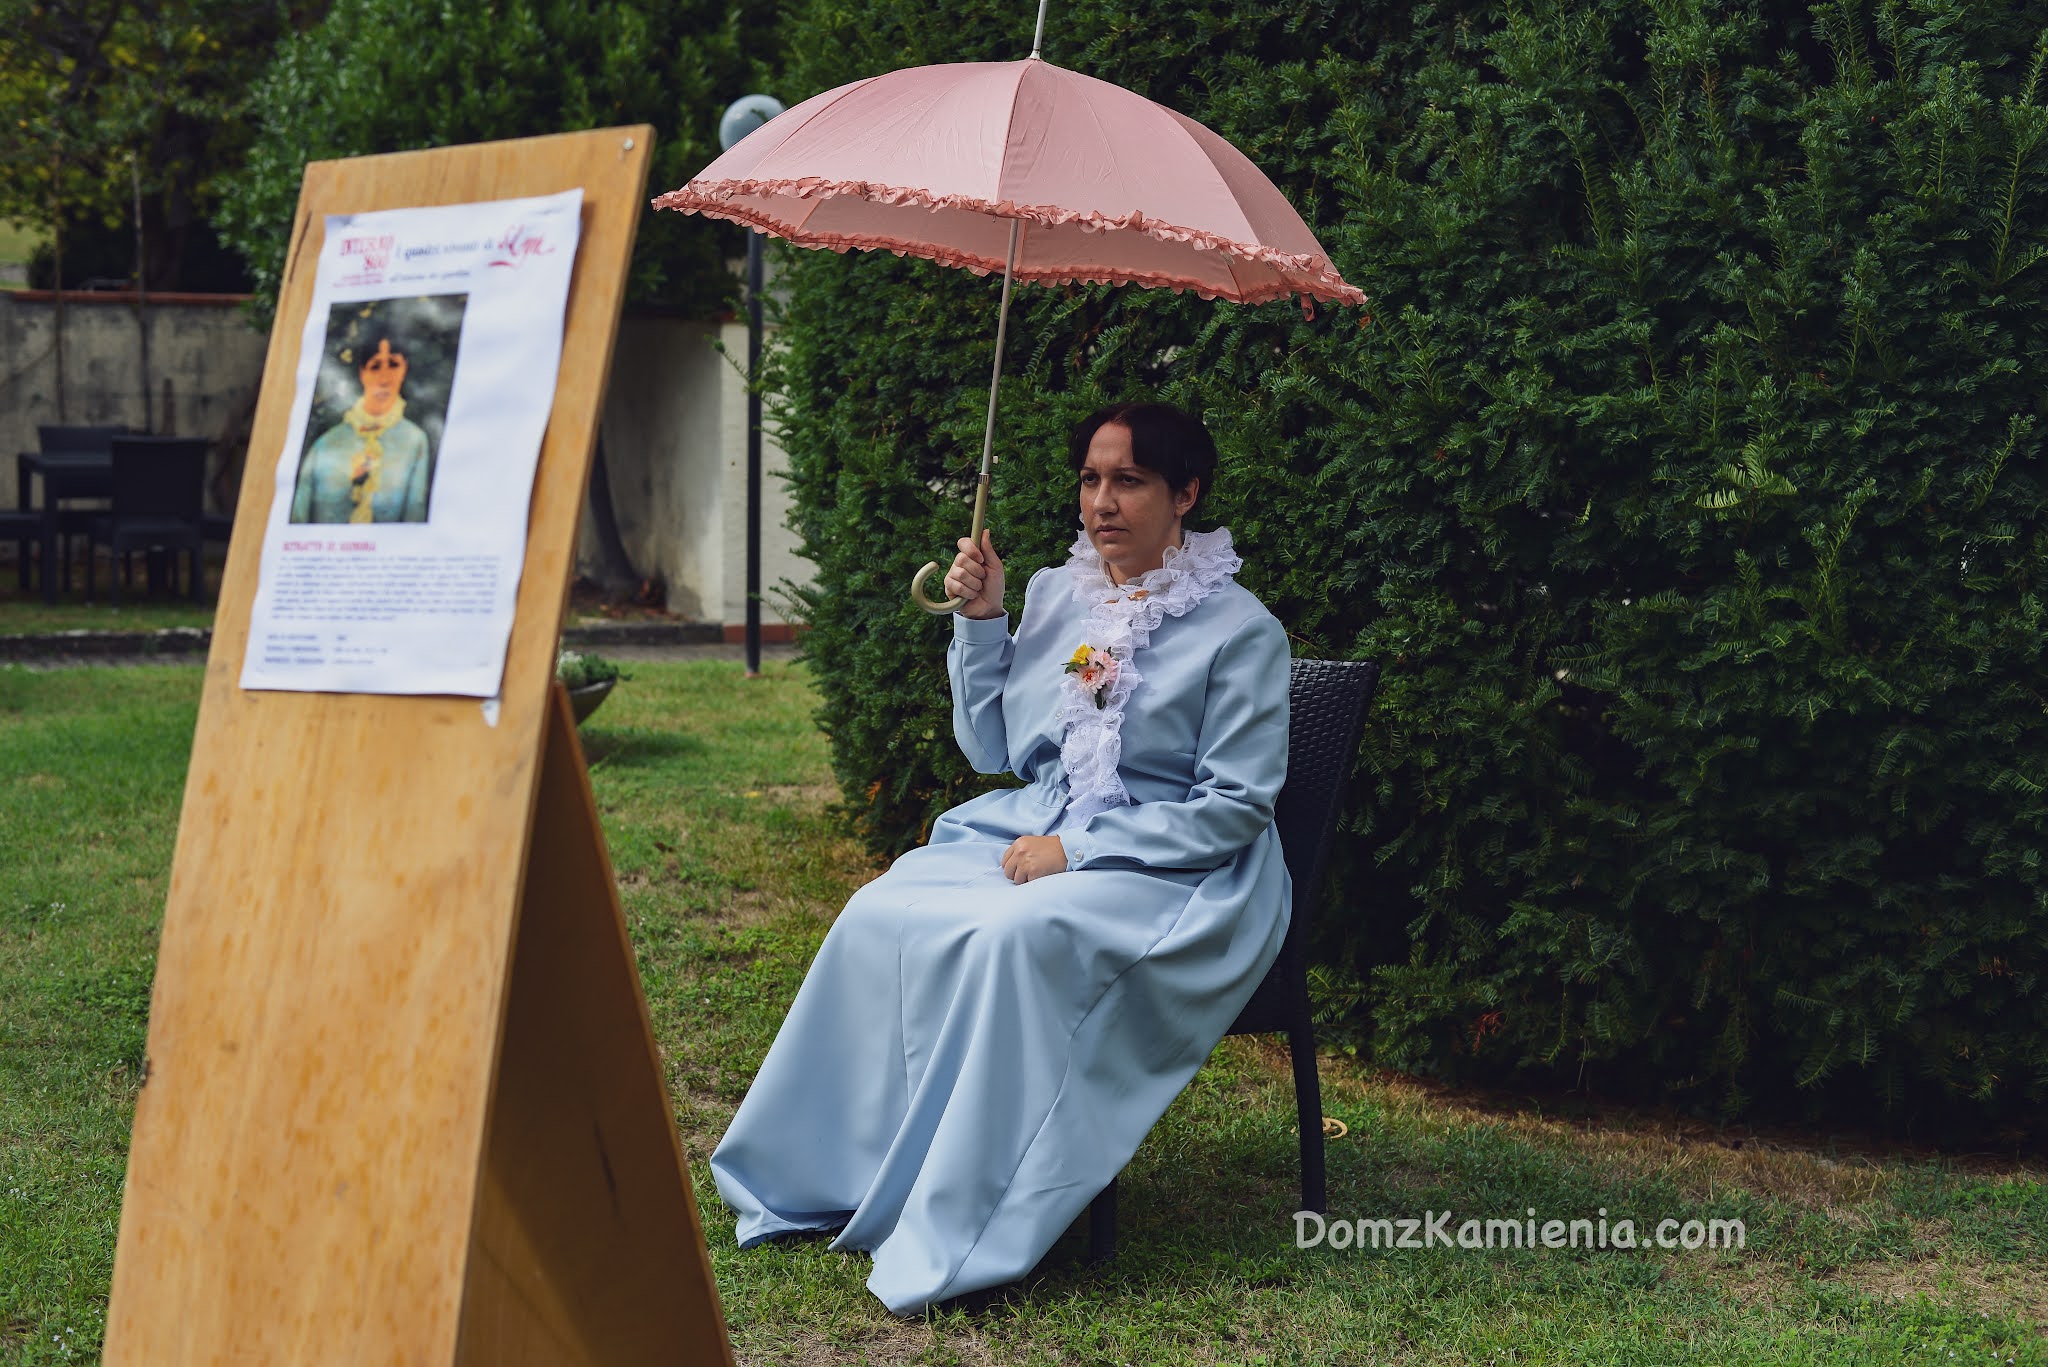 Feste dell'Ottocento Modigliana 2021, Dom z Kamienia blog